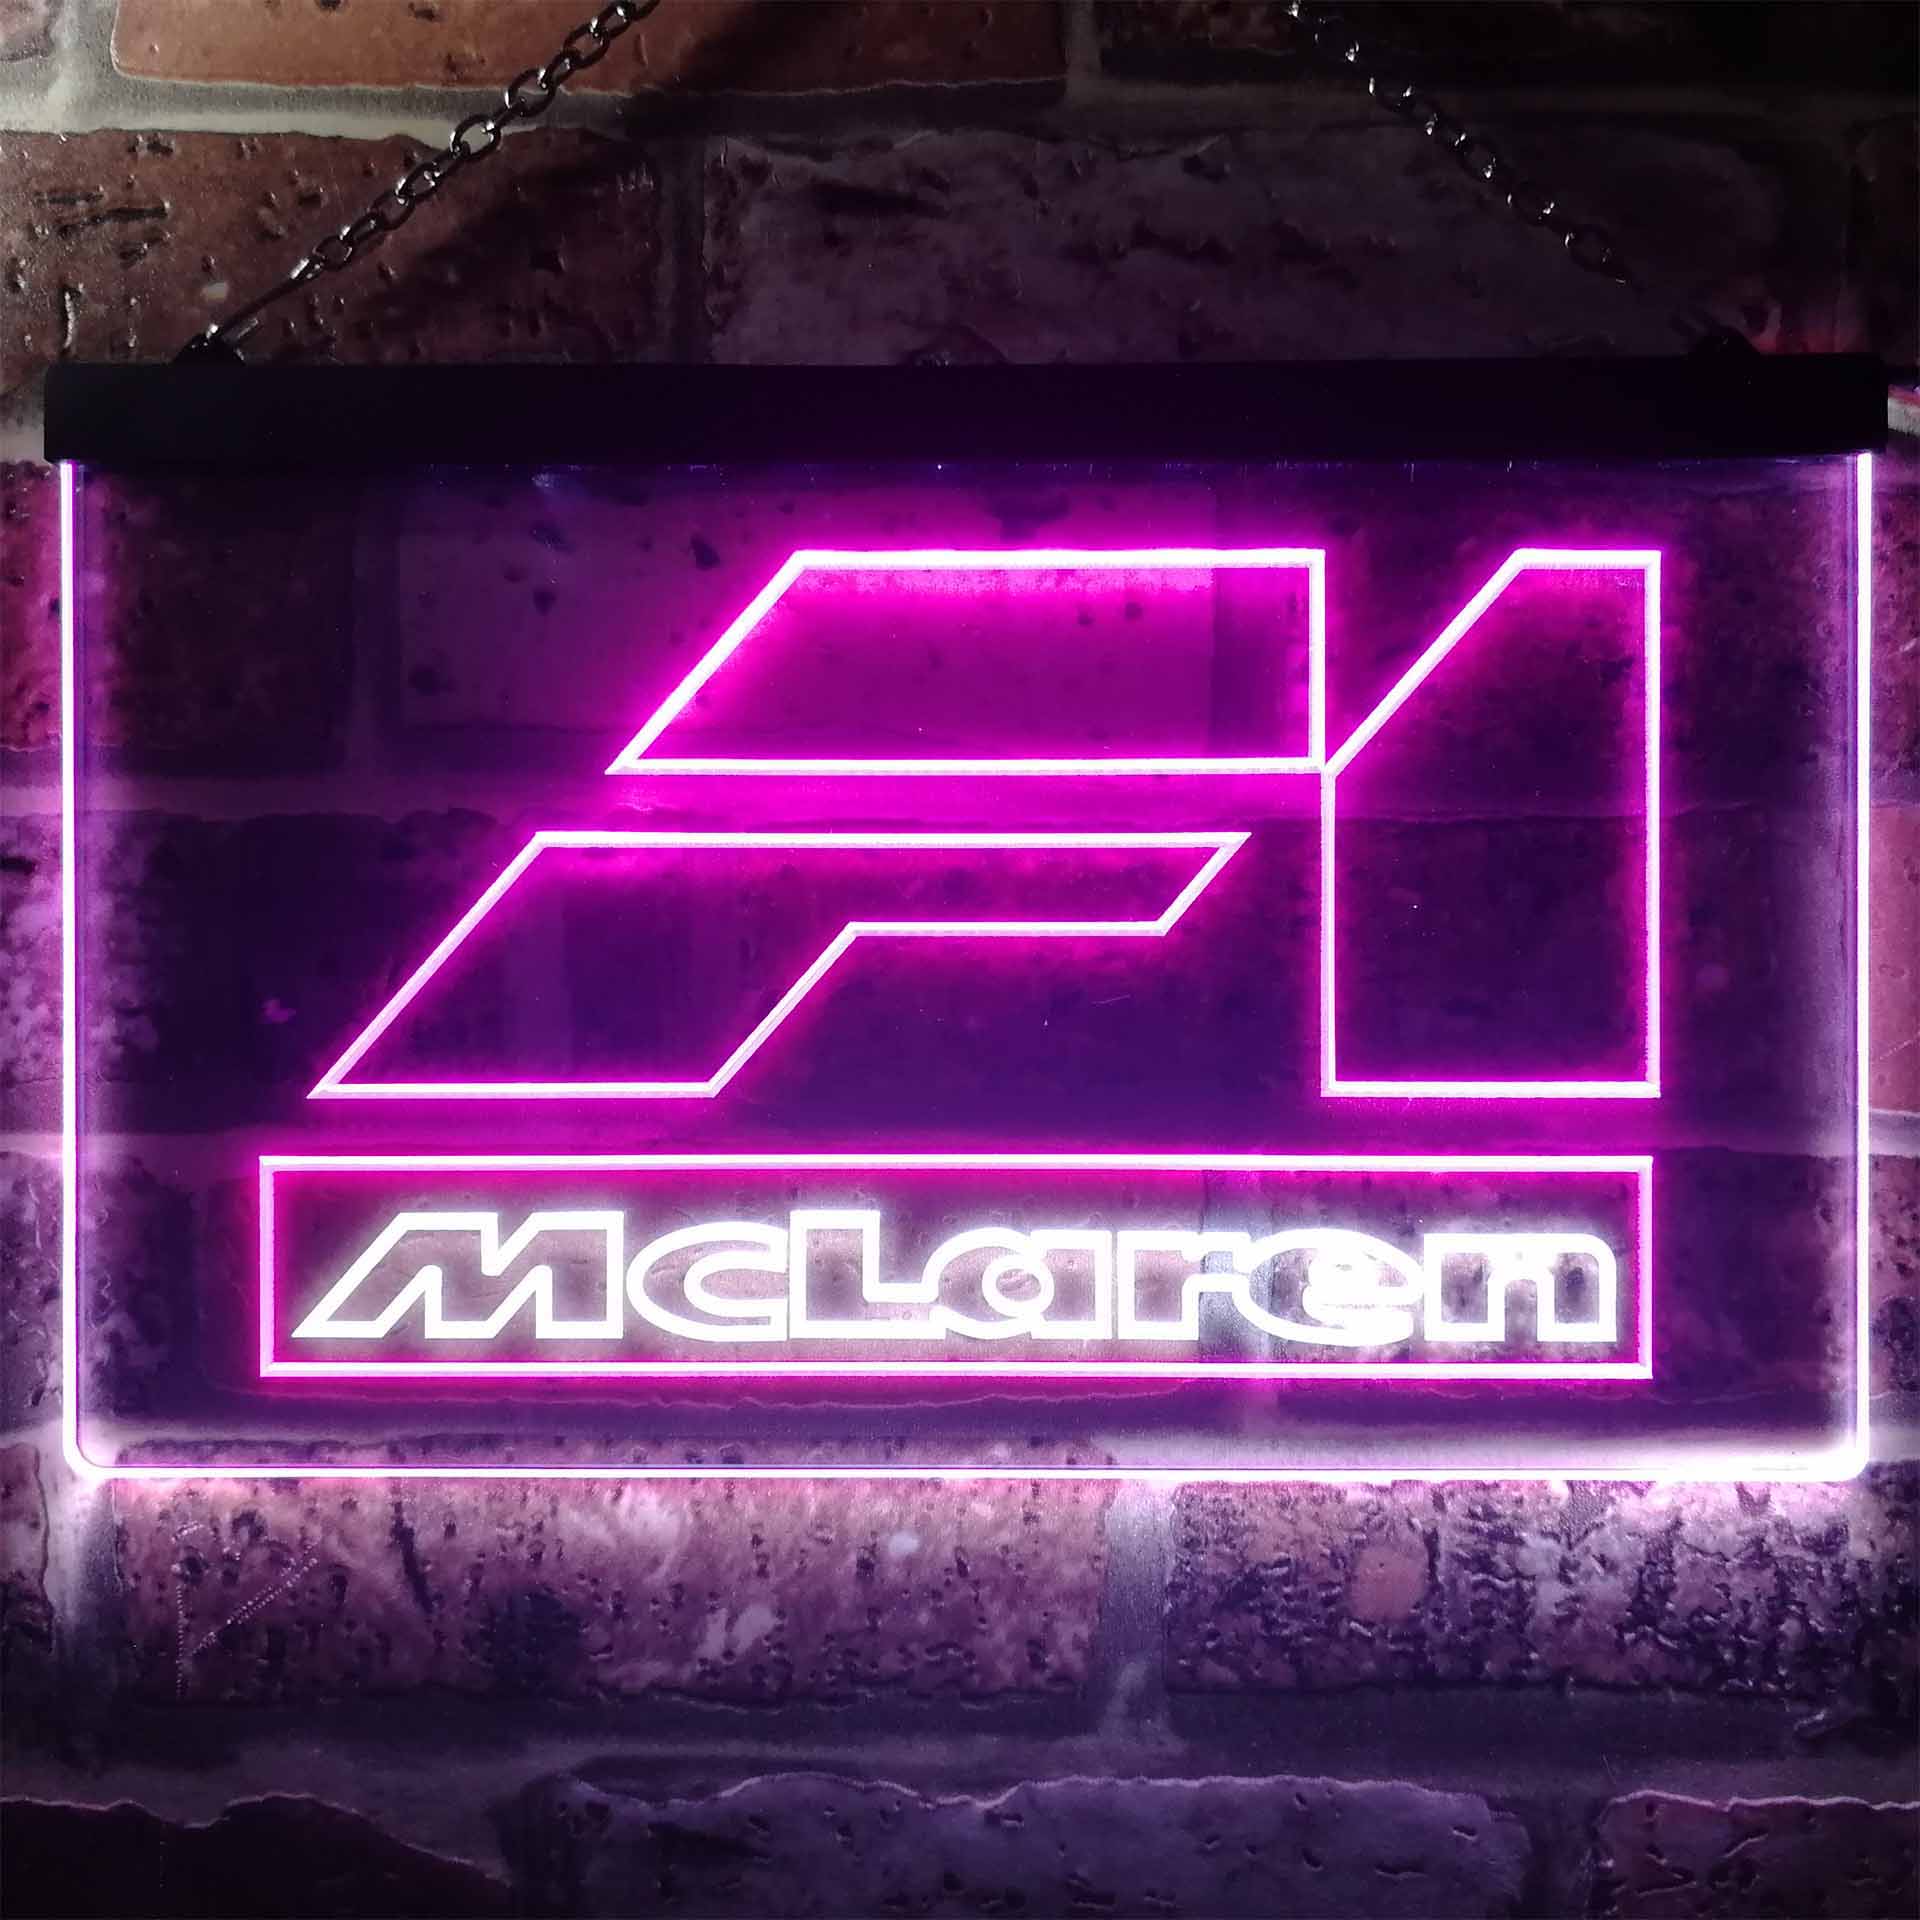 Mclaren F1 Car Neon LED Sign